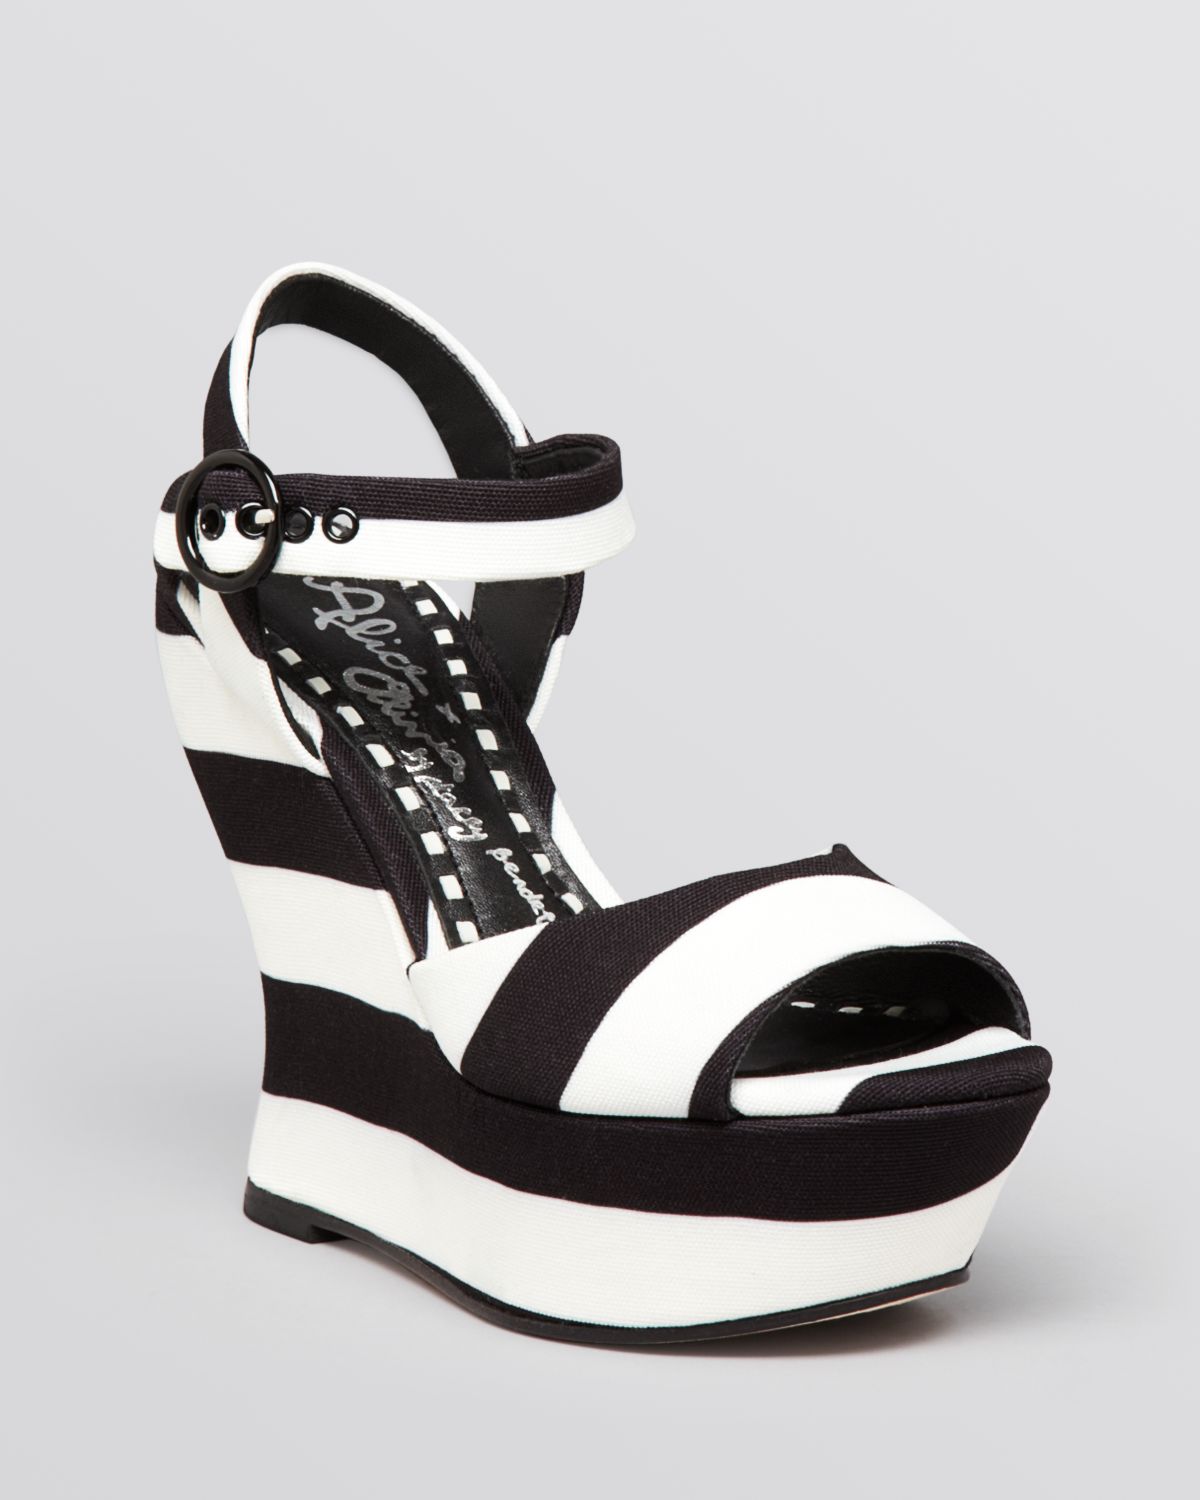 Alice + Olivia Alice Olivia Platform Wedge Sandals Jana Striped in Black/ White (White) - Lyst